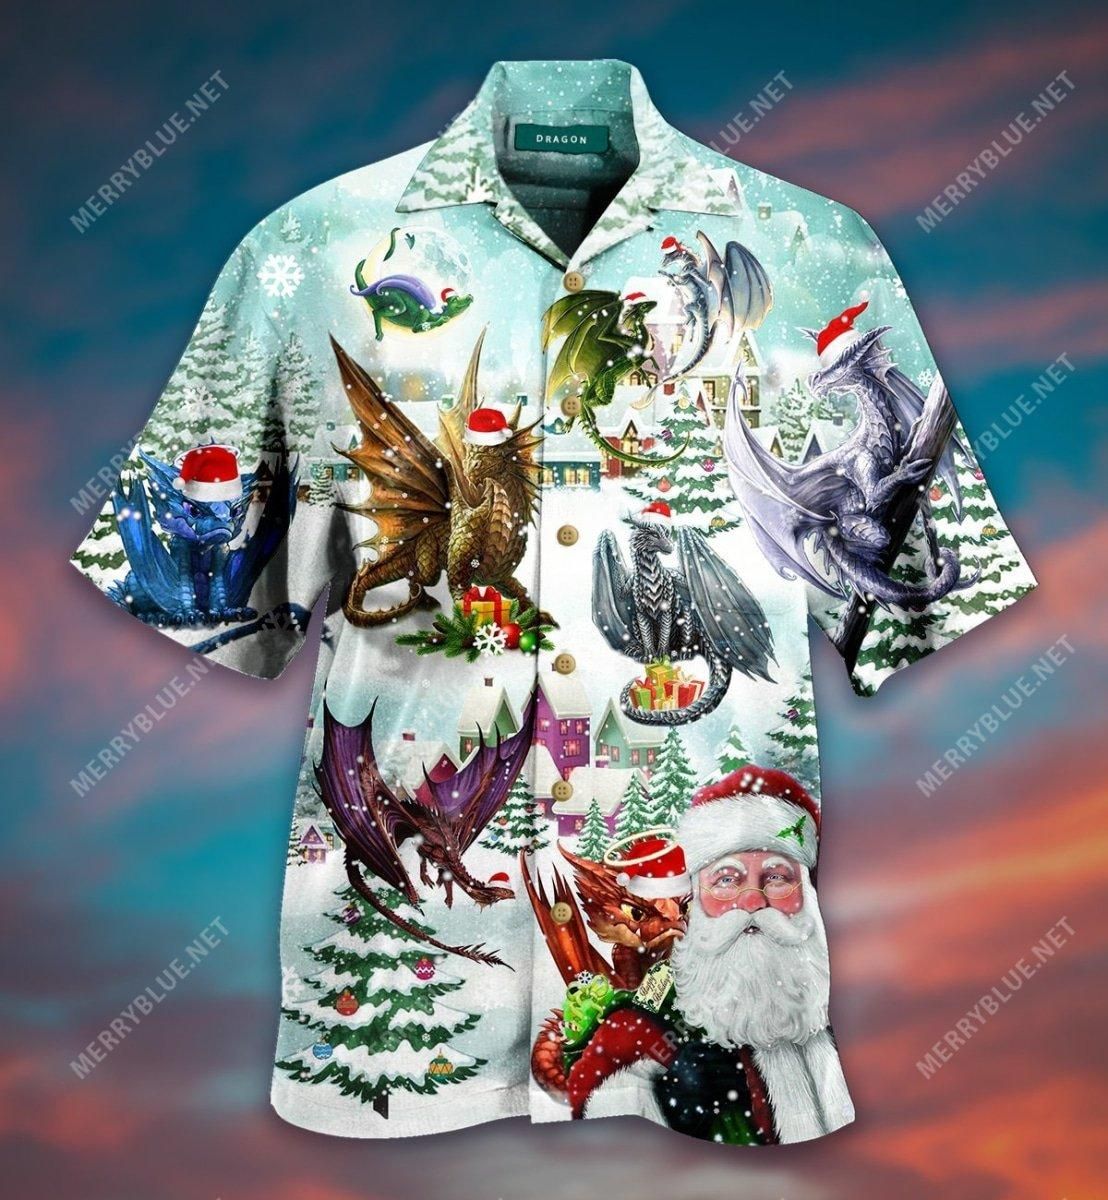 Dragon'S Happy Holidays Aloha Hawaiian Shirt Colorful Short Sleeve Summer Beach Casual Shirt For Men And Women